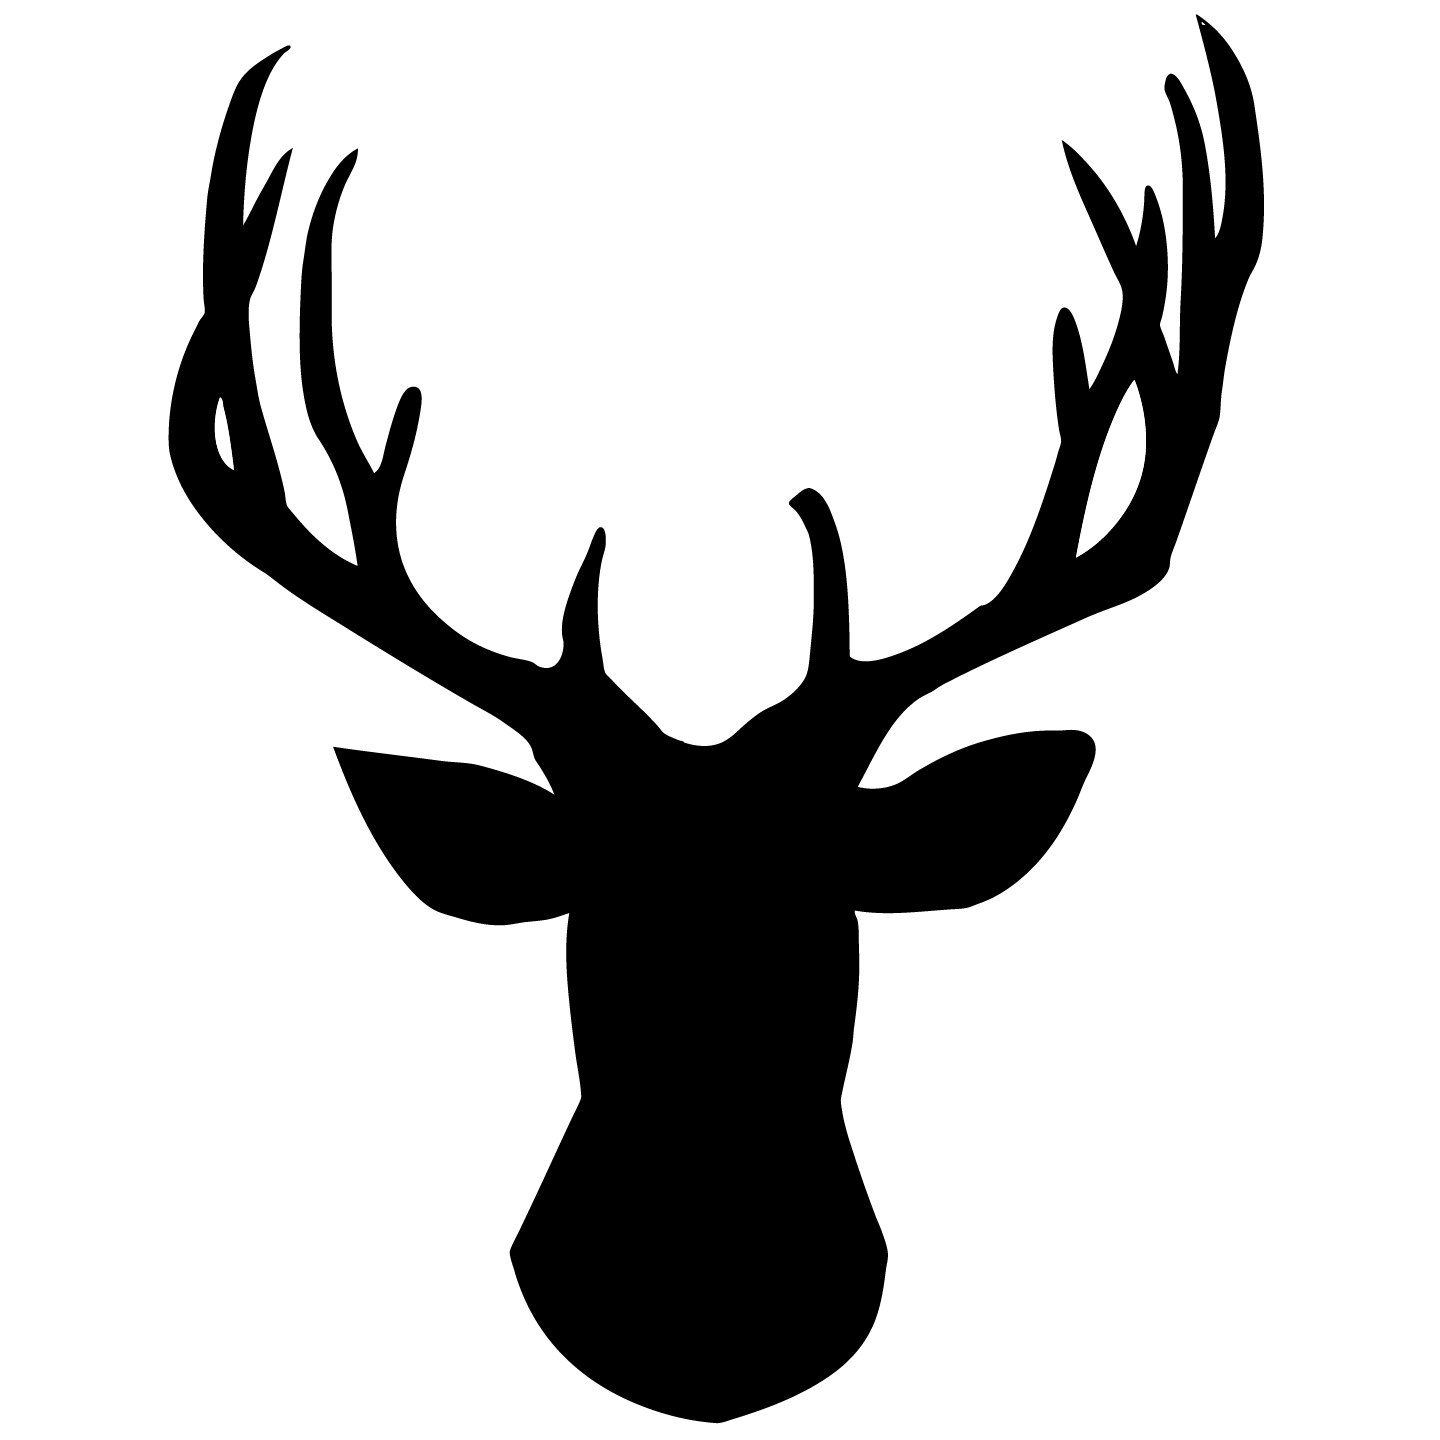 Deer Head Outline Cliparts co